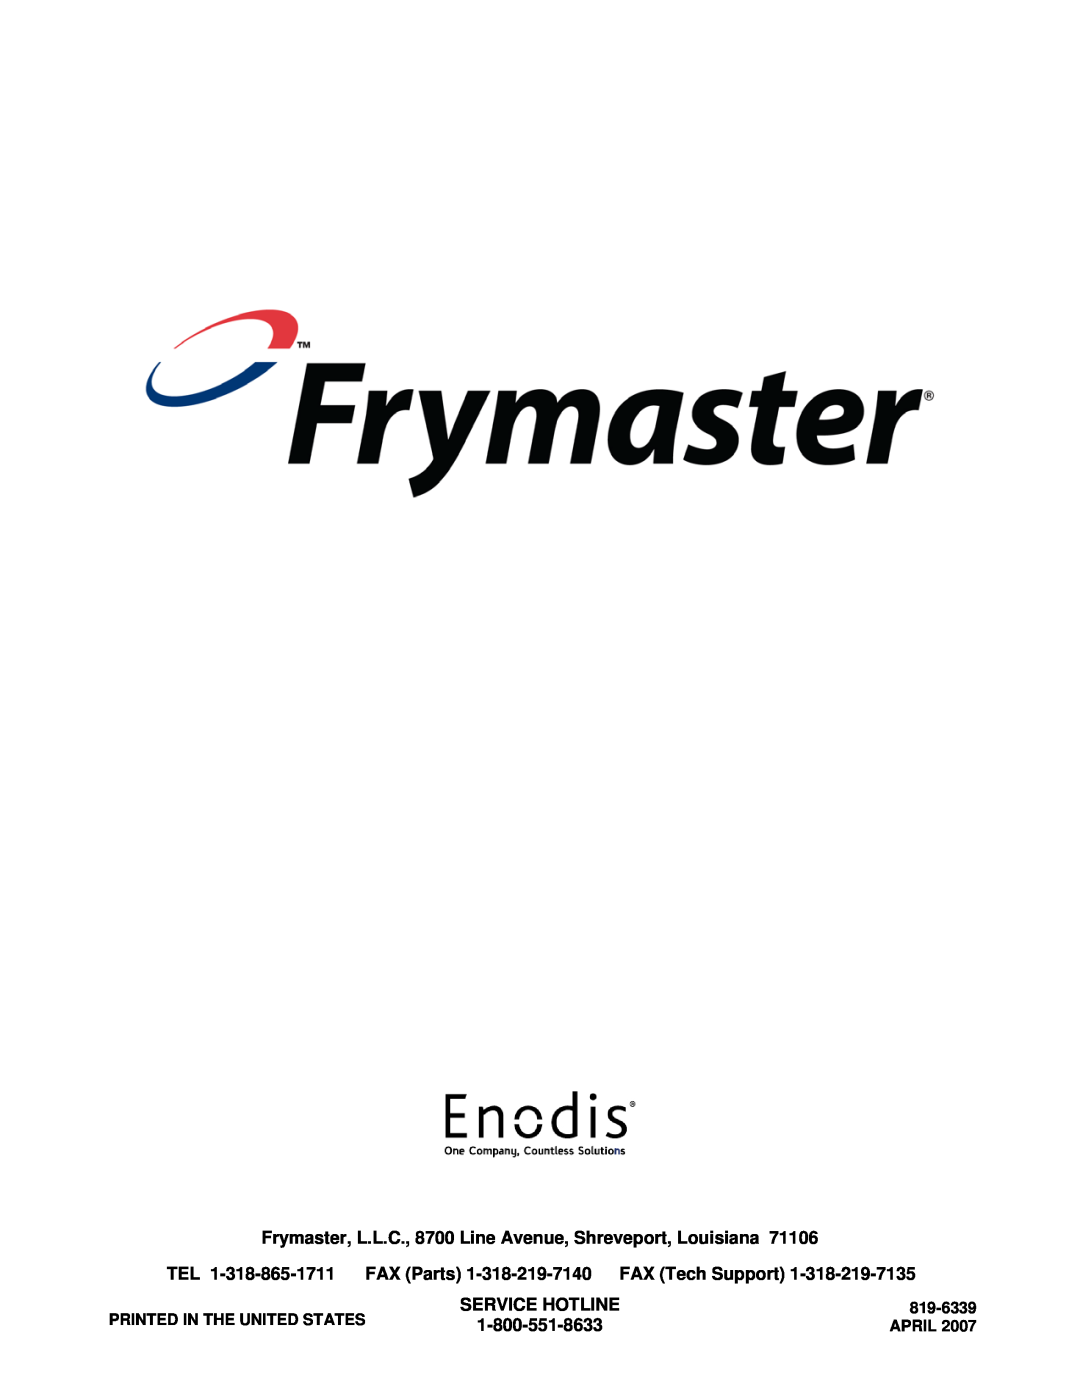 Frymaster Protector Series operation manual Service Hotline, 819-6339, April 